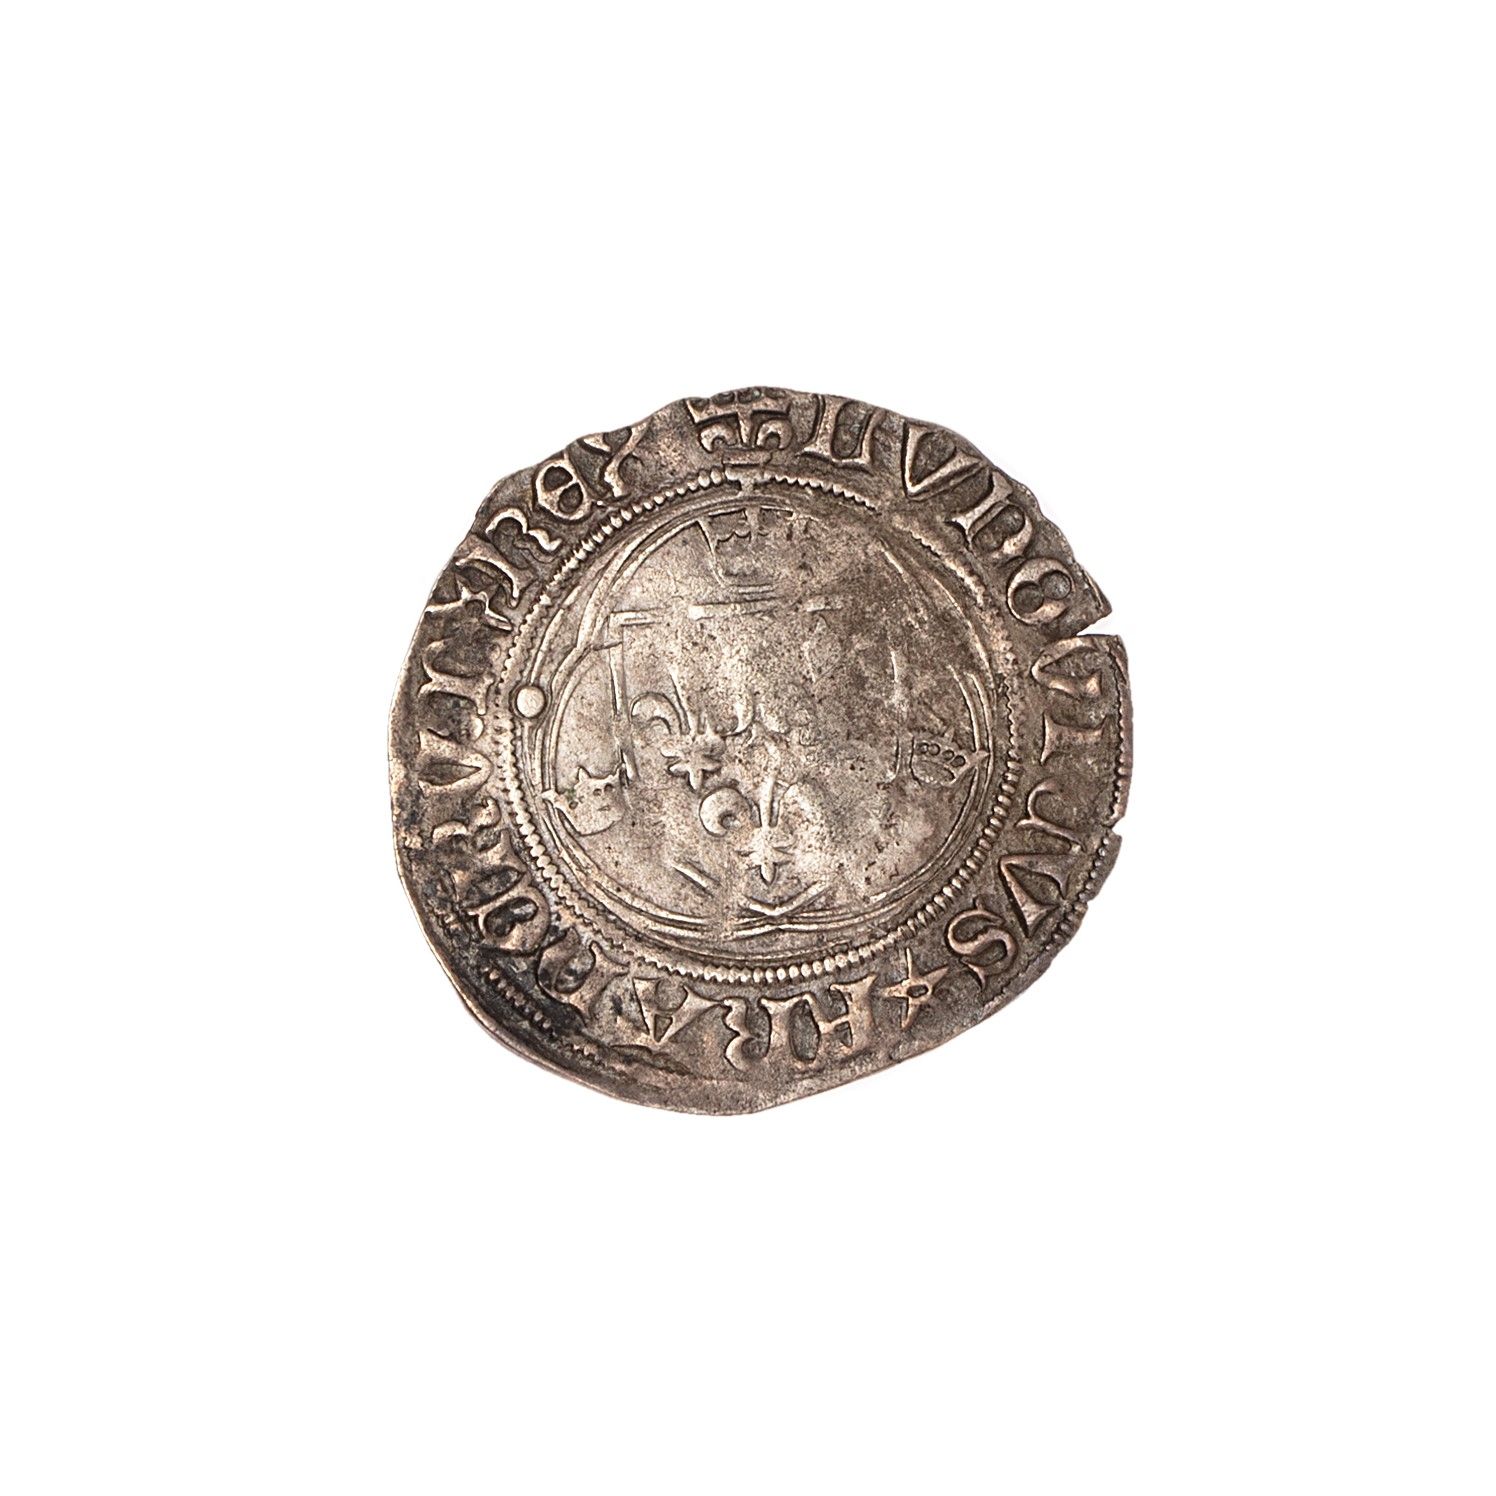 Null Luigi XII (1498-1514)

Bianco con corona.

Voce 17 Amiens. 

Dup. : 664. 

&hellip;